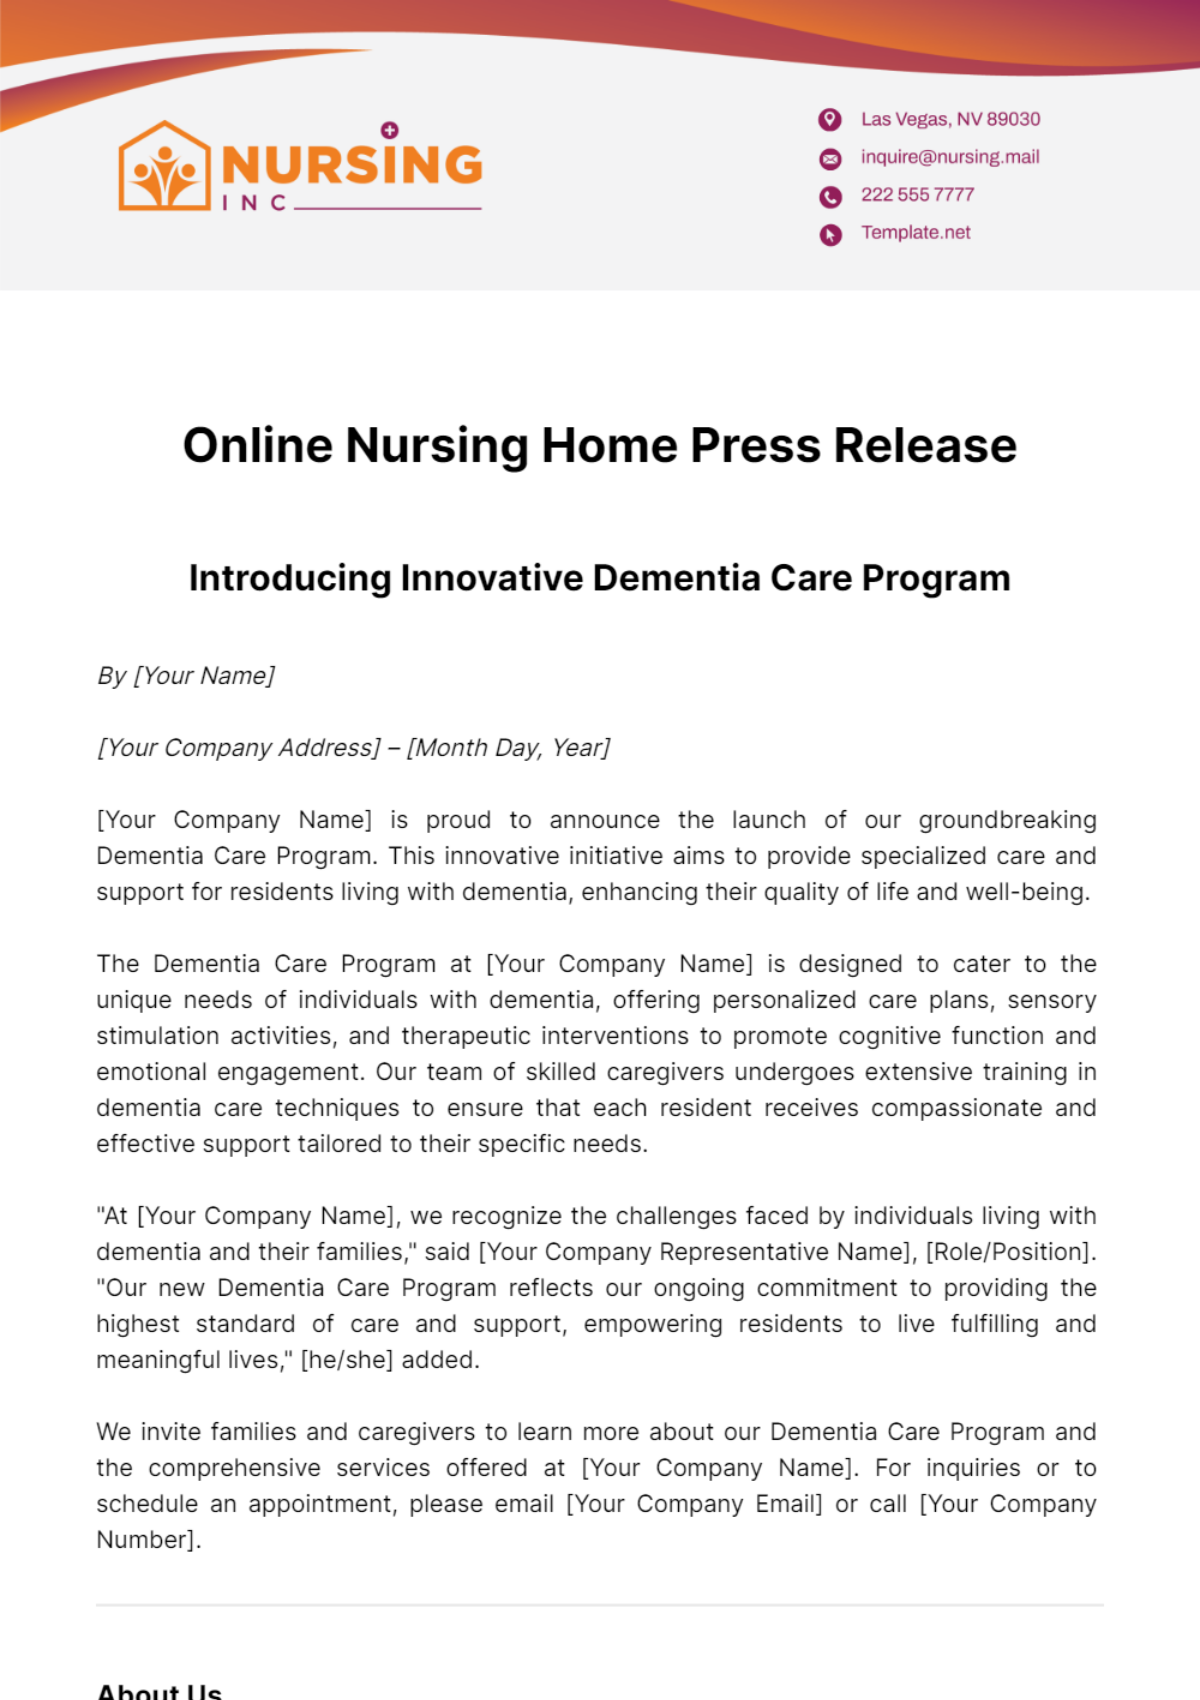 Online Nursing Home Press Release Template